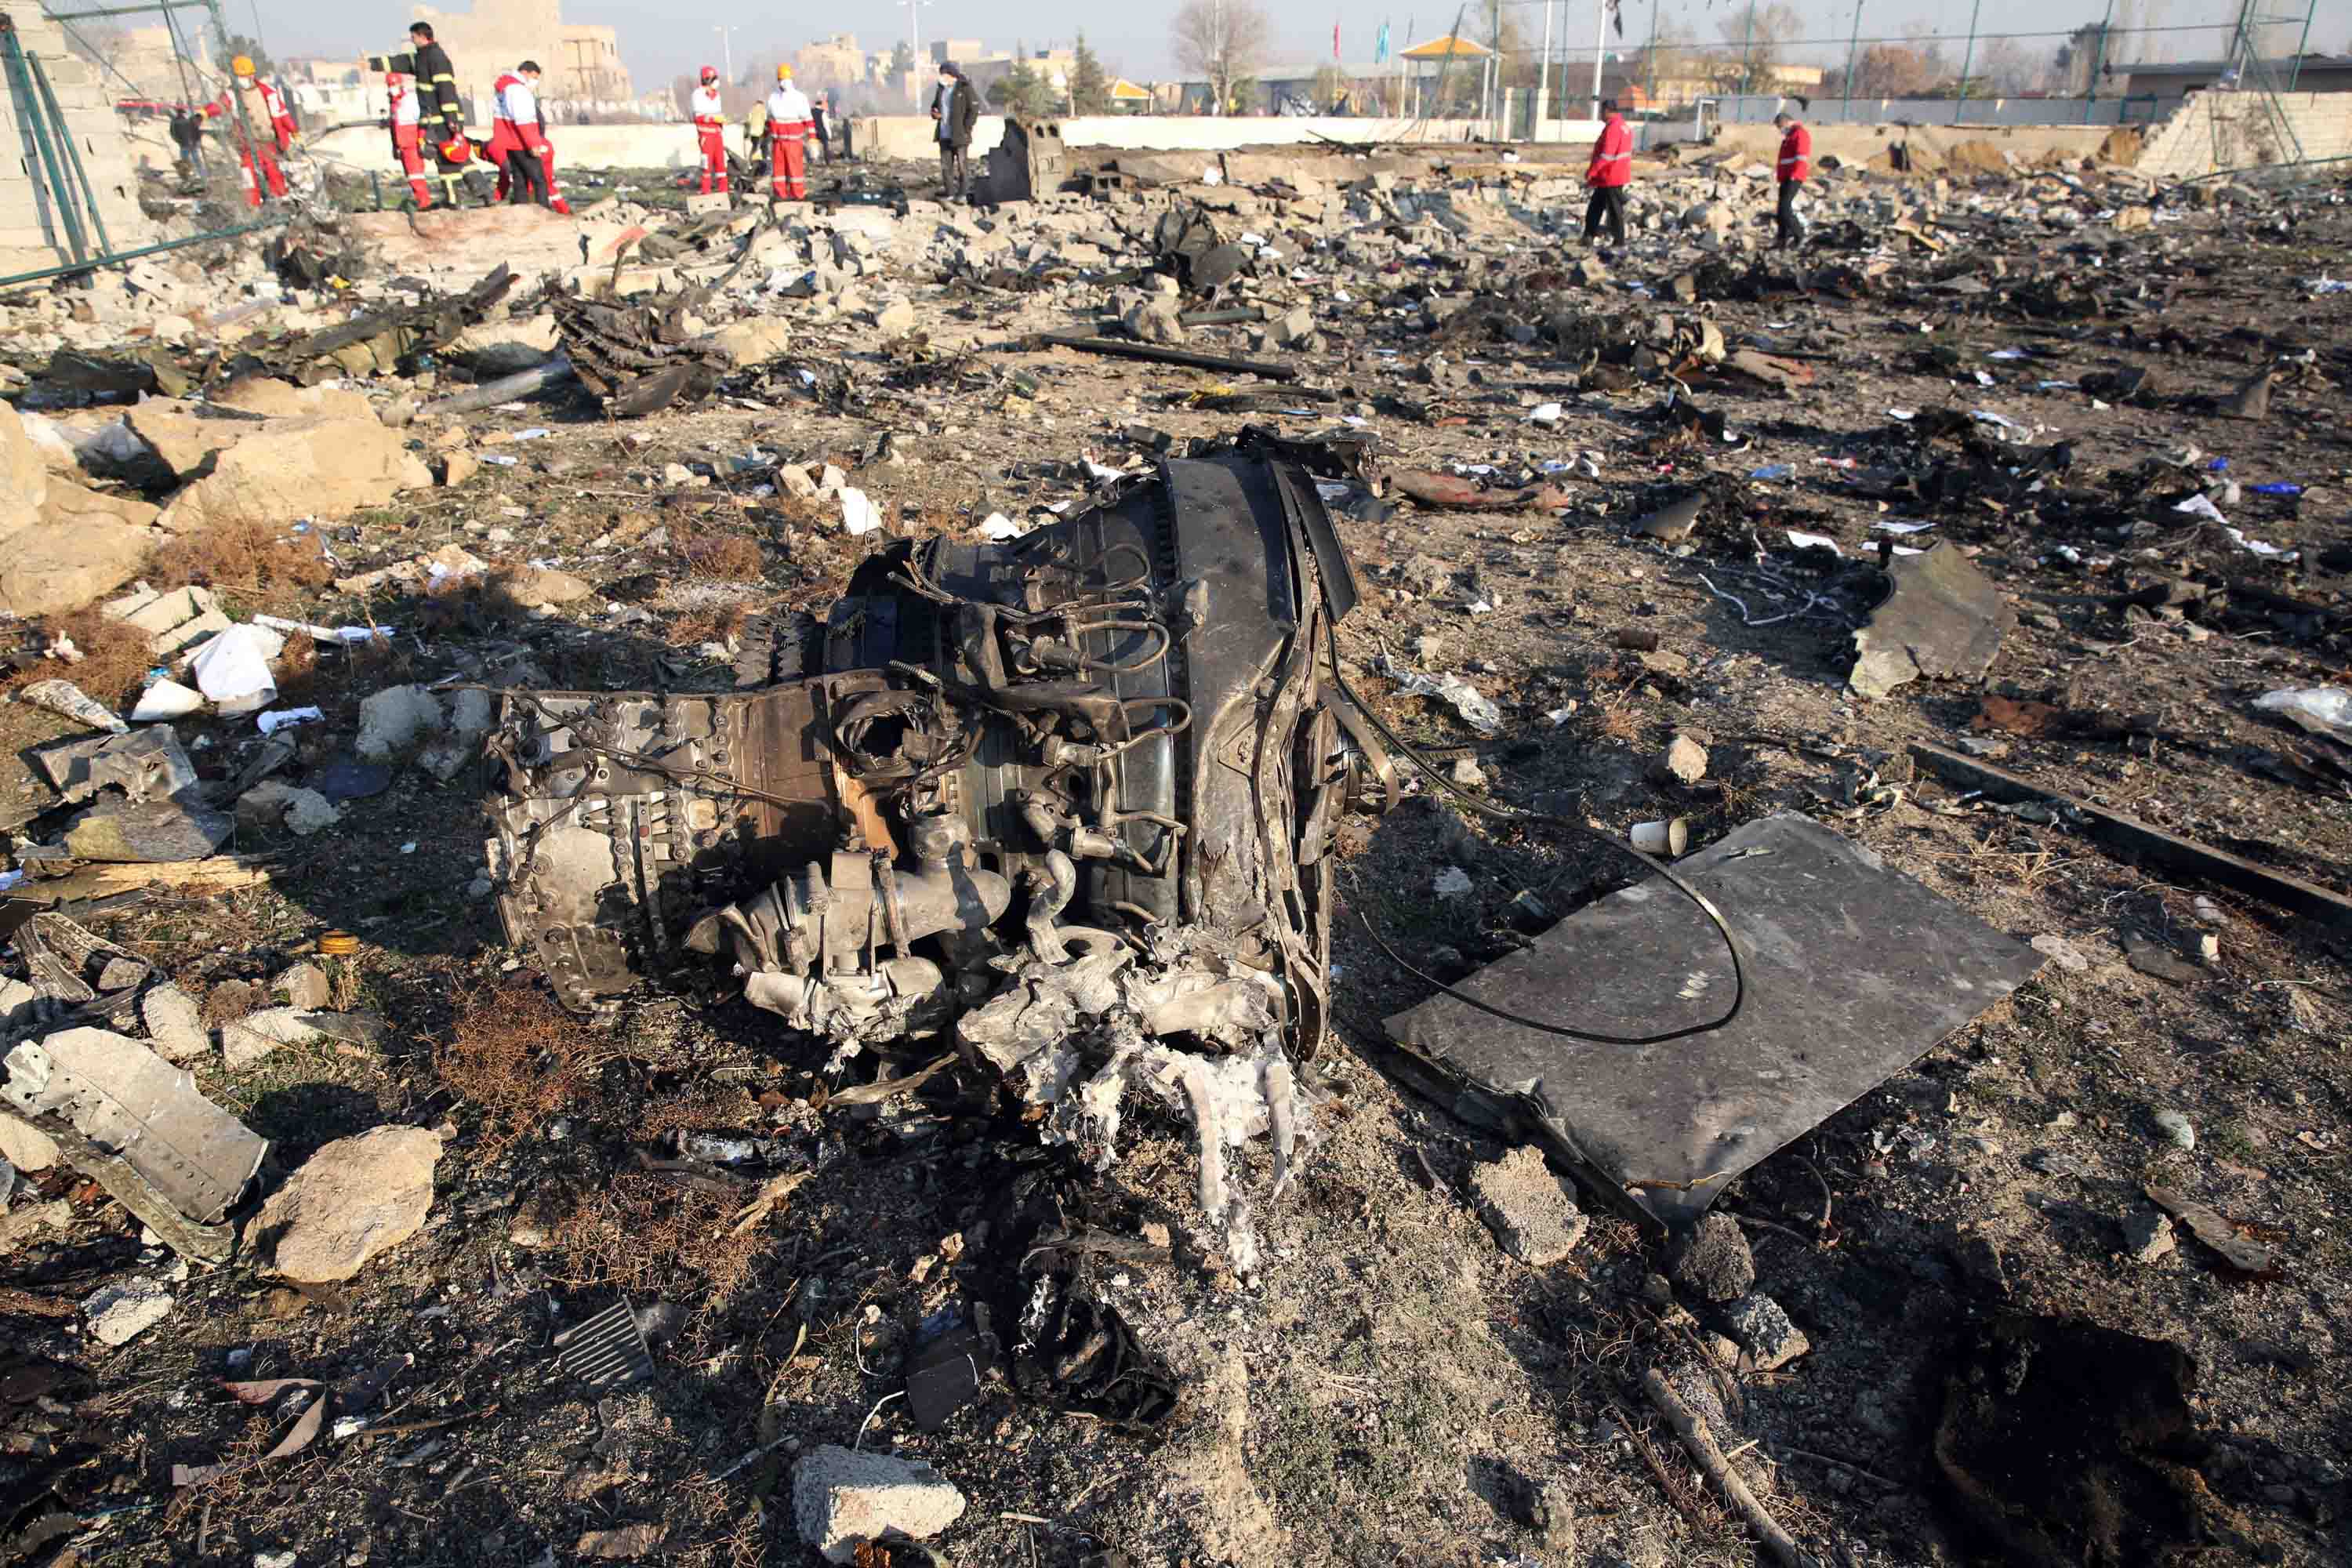 Iran allocates USD 150,000 for families of each victim of Ukraine plane  crash: IRNA